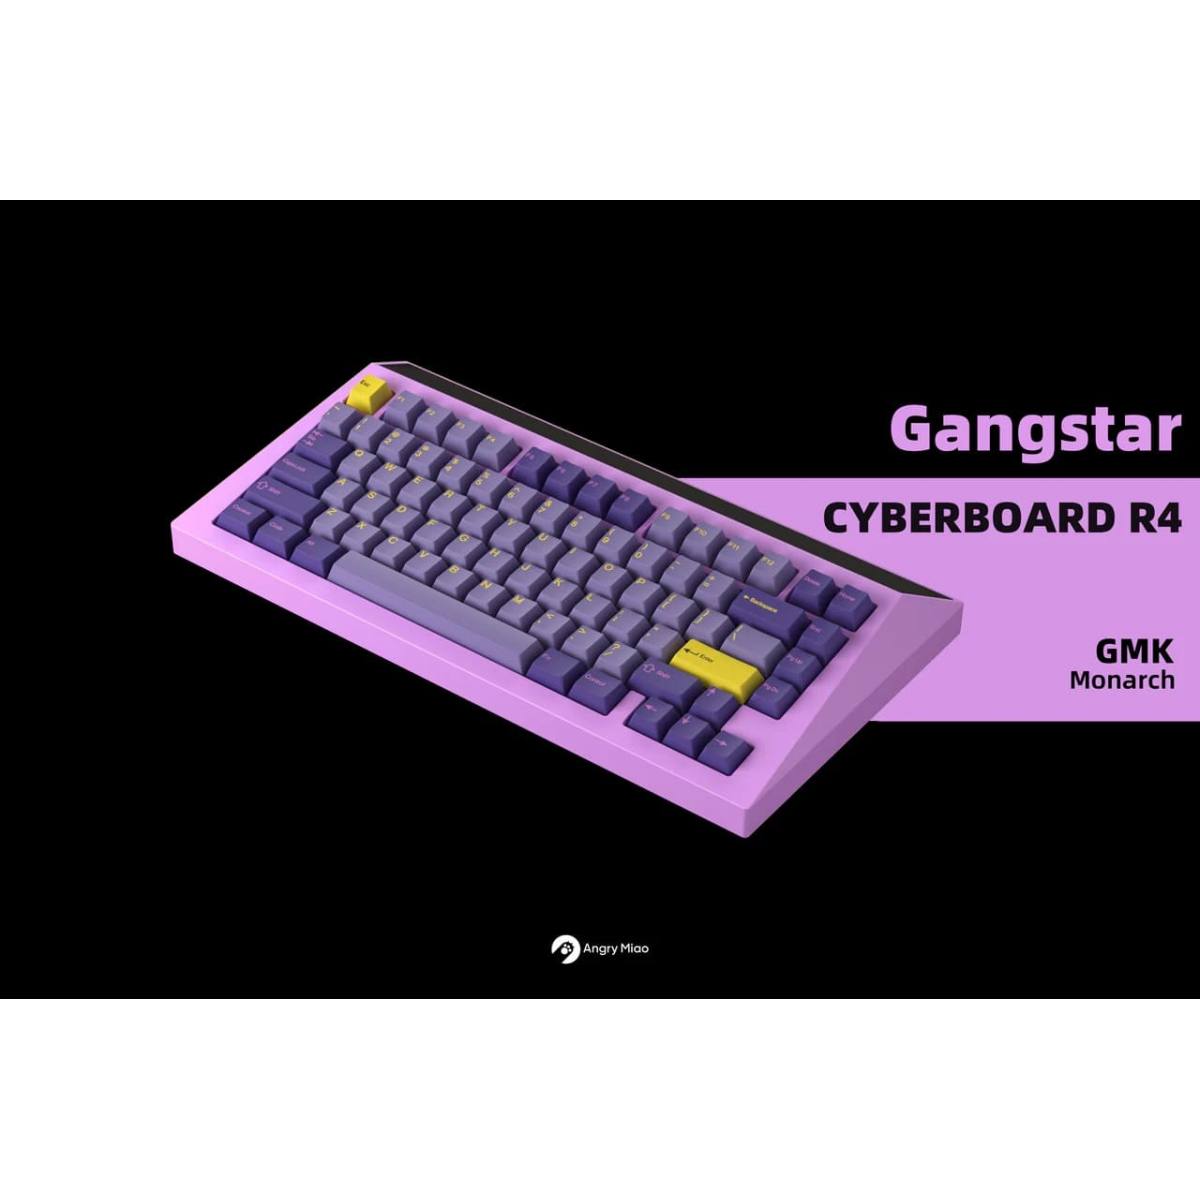 Bundle Angry Miao Cyberboard R4 Gangstar